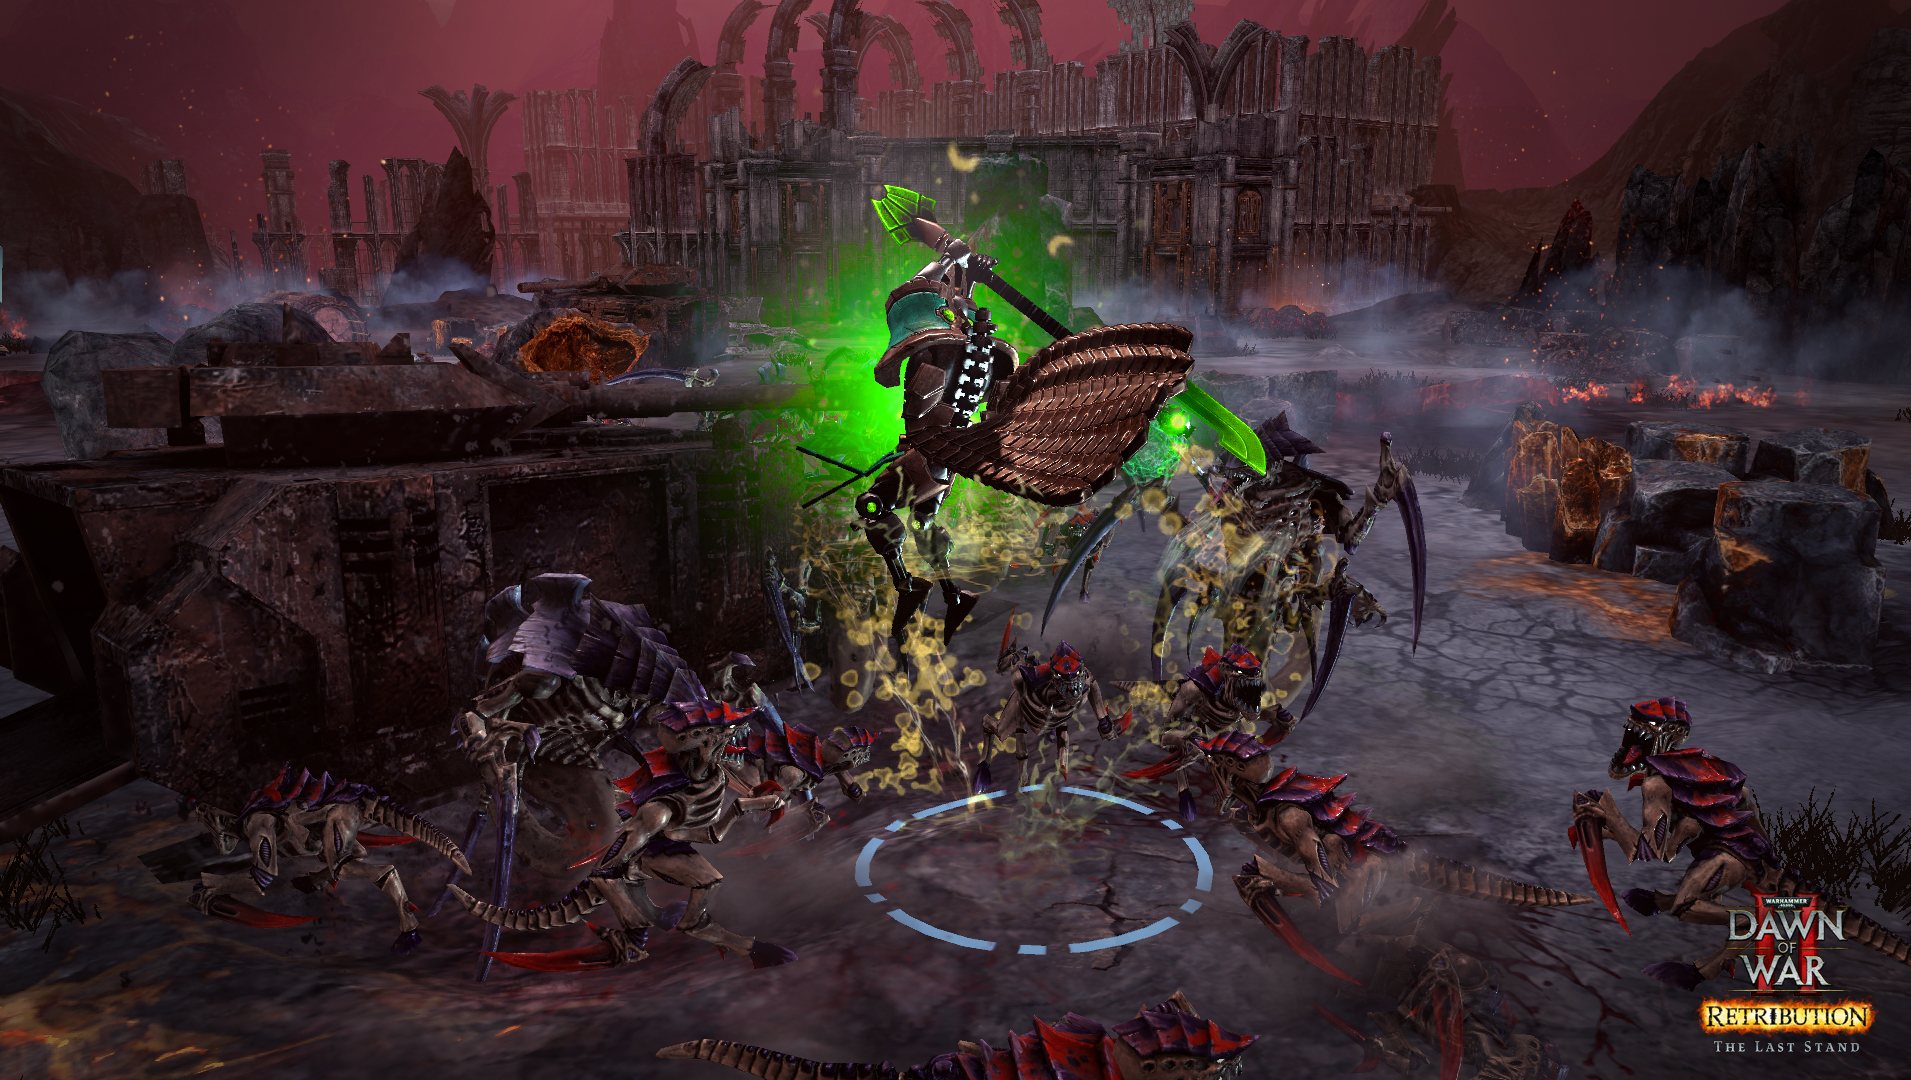 Warhammer 40,000: Dawn Of War II: Retribution - The Last Stand Necron Overlord DLC Steam CD Key